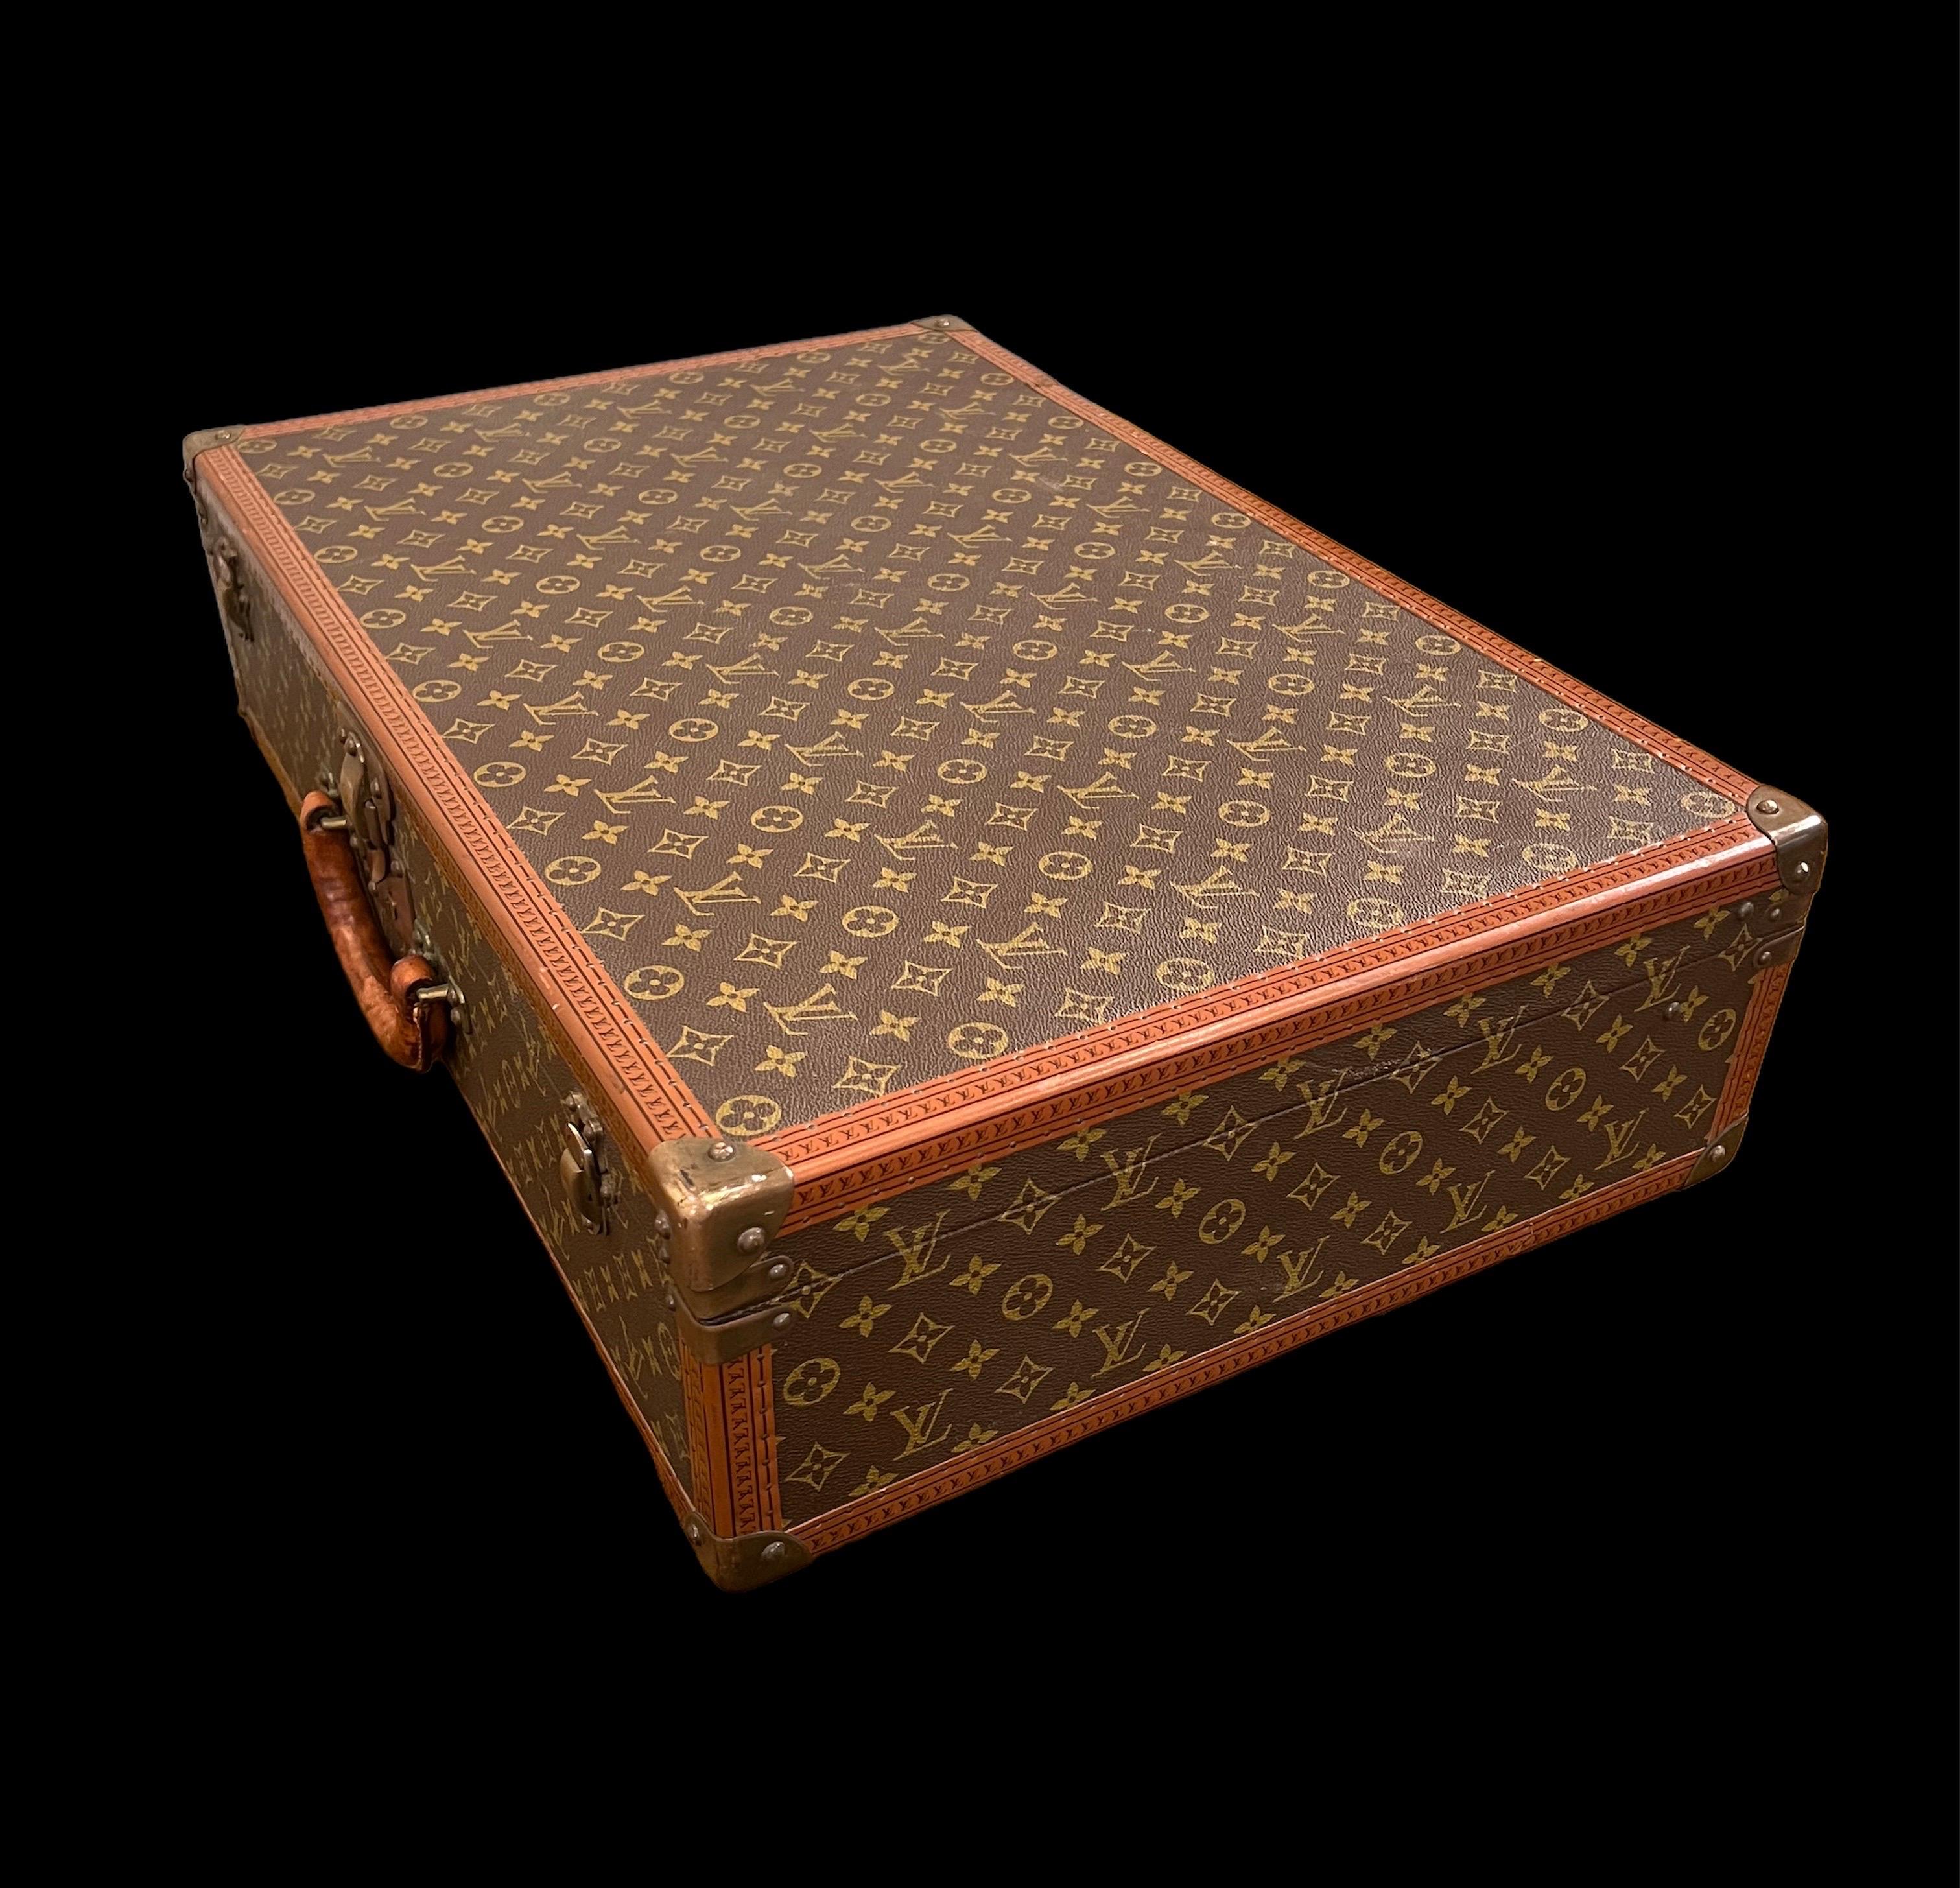 Luis Vuitton suitcase.